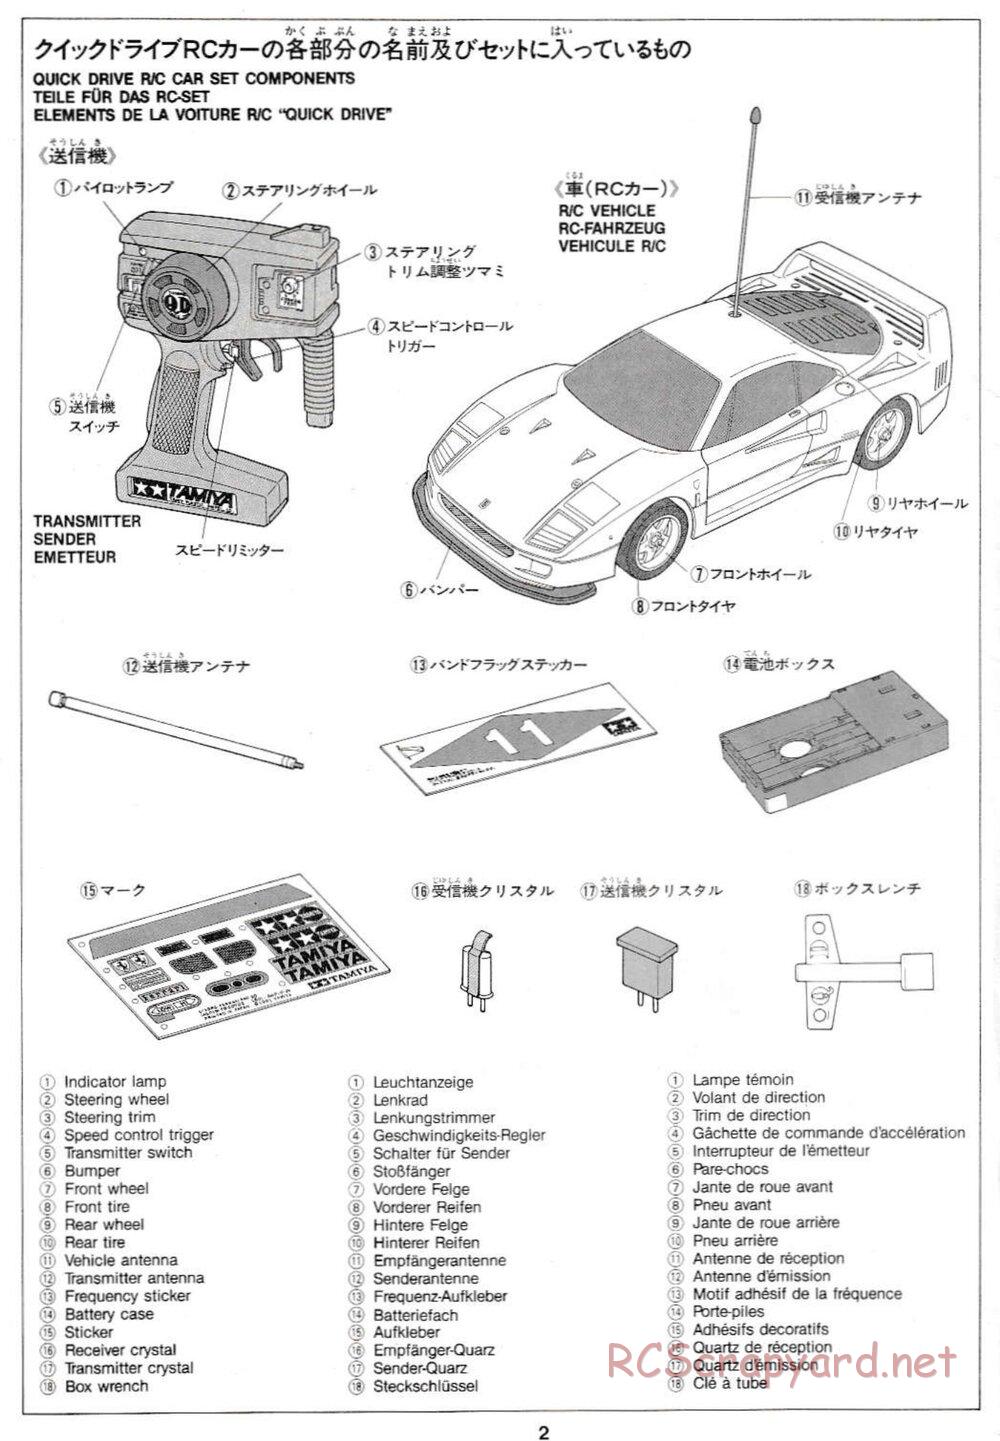 Tamiya - Ferrari F40 QD Chassis - Manual - Page 2